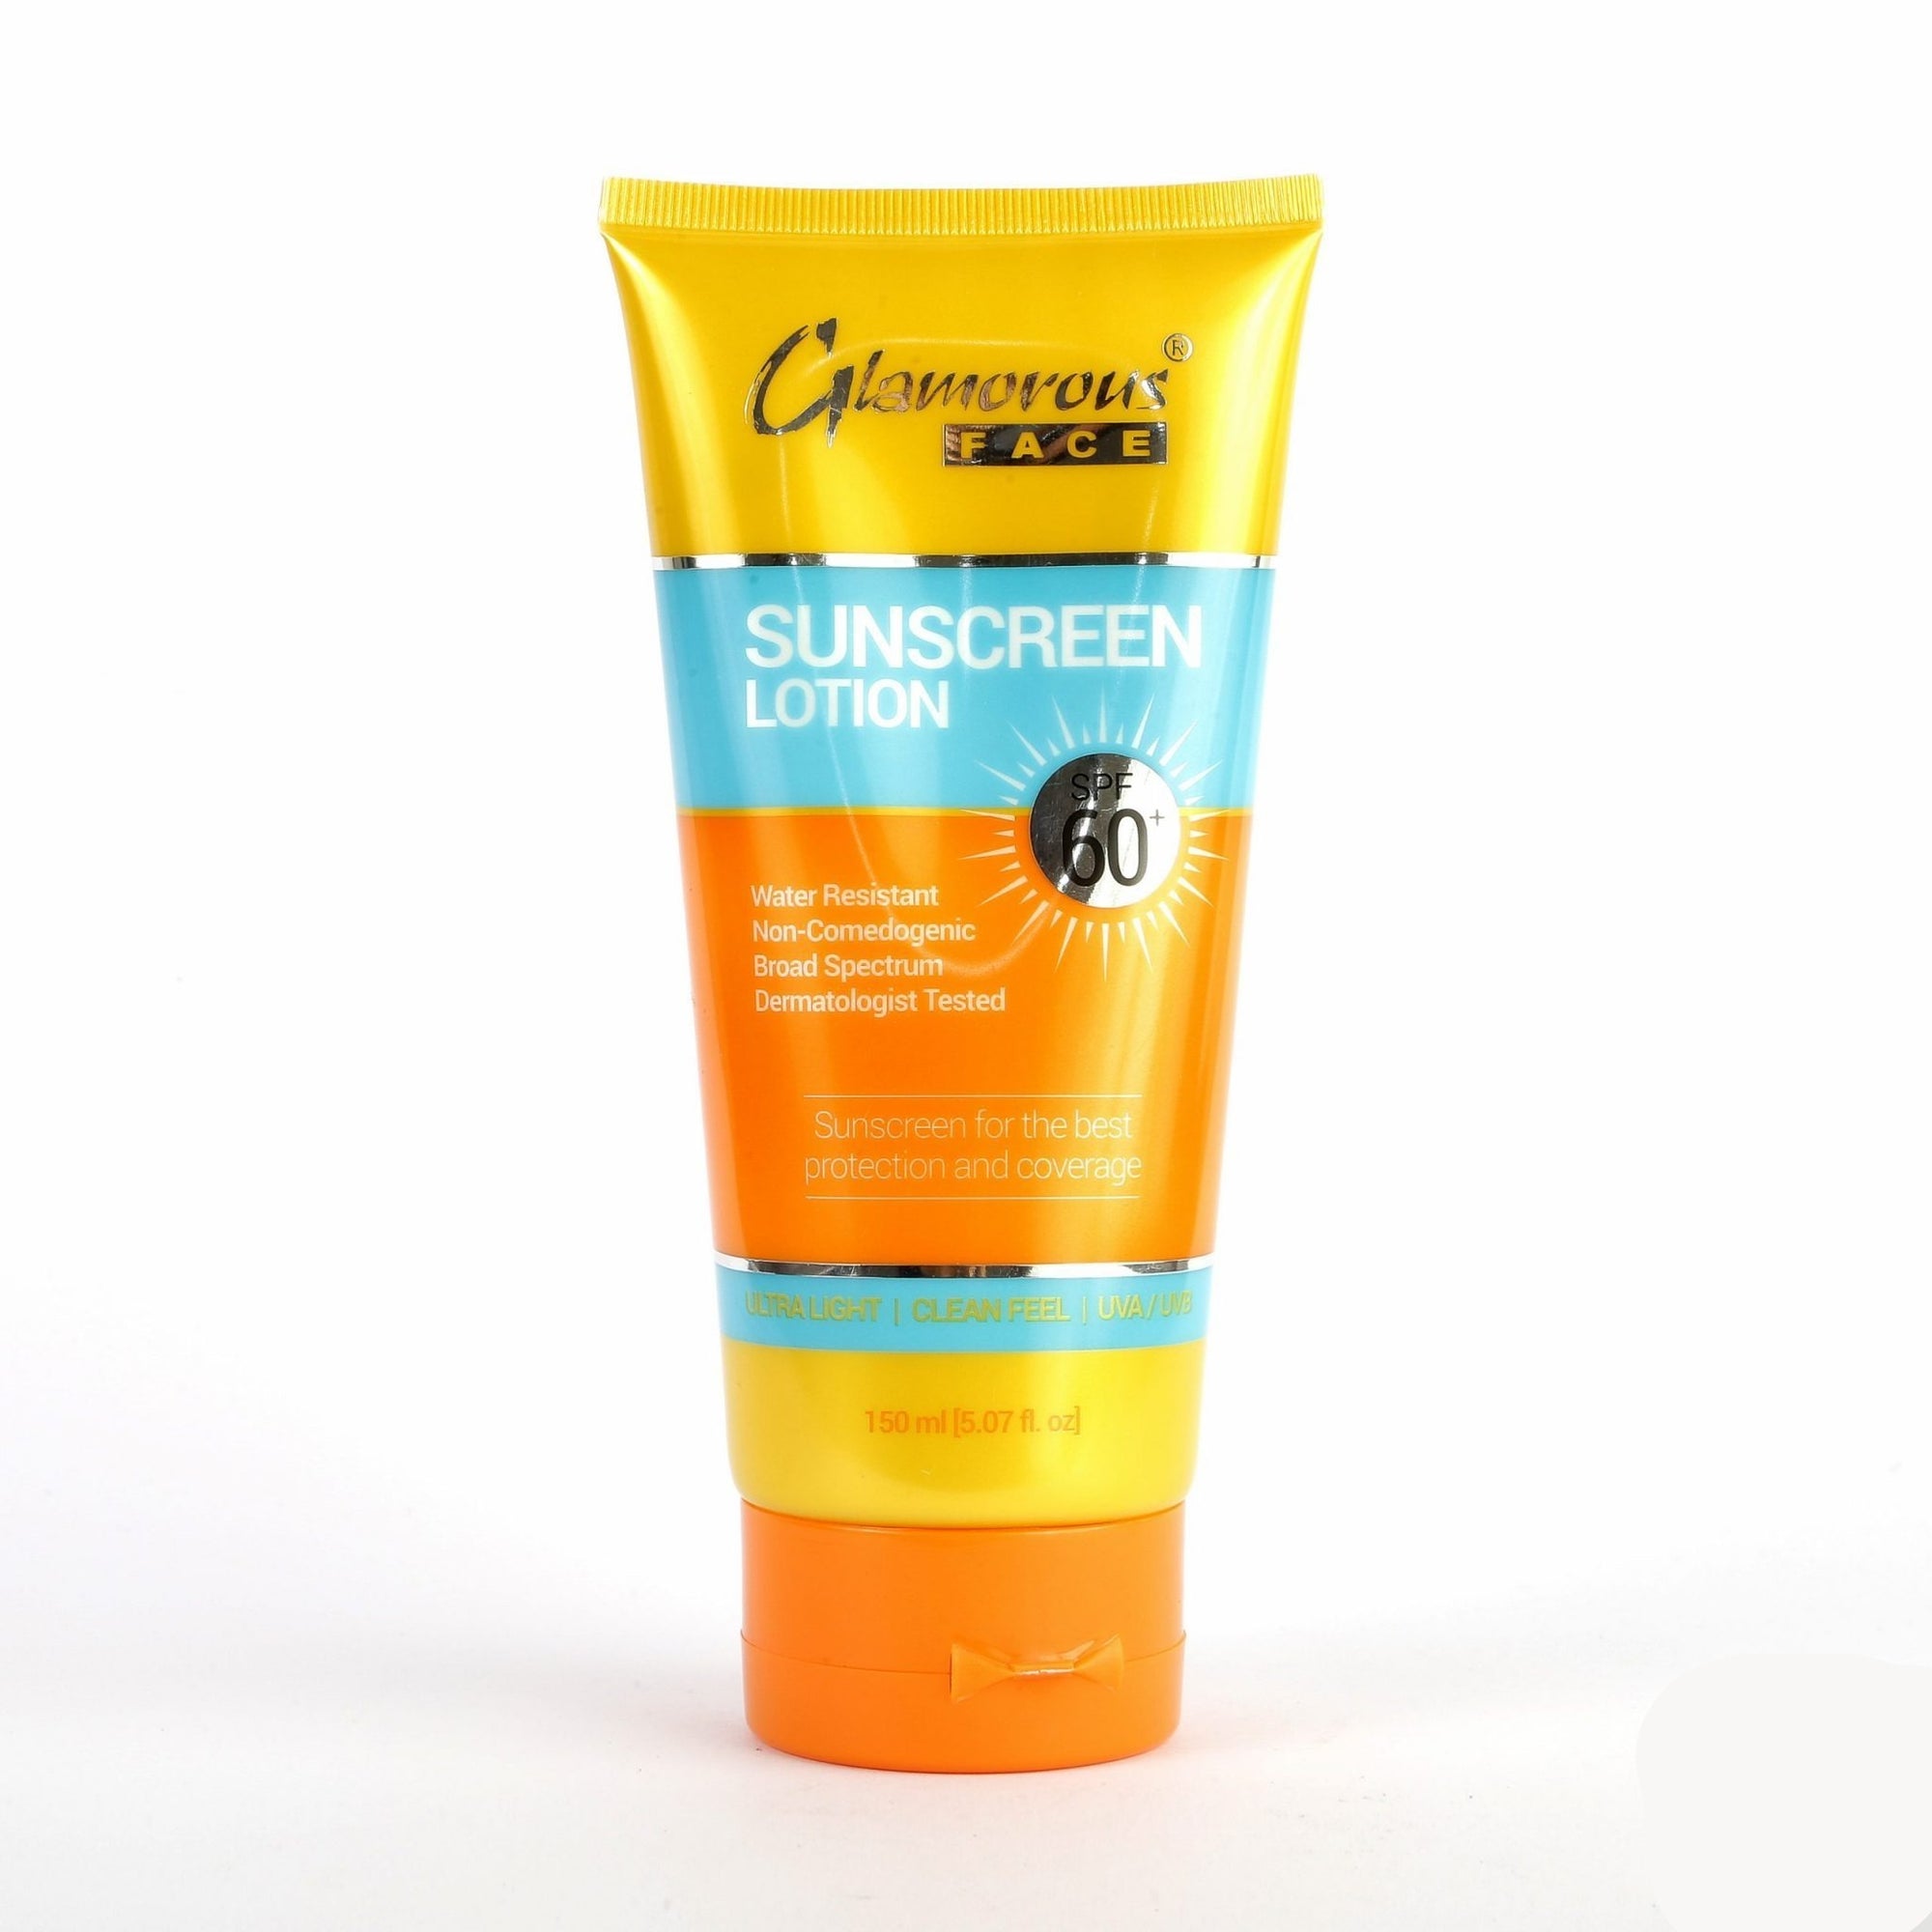 Glamorous Face Sunscreen Lotion Sunblock 60+ 150ml freeshipping - lasertag.pk